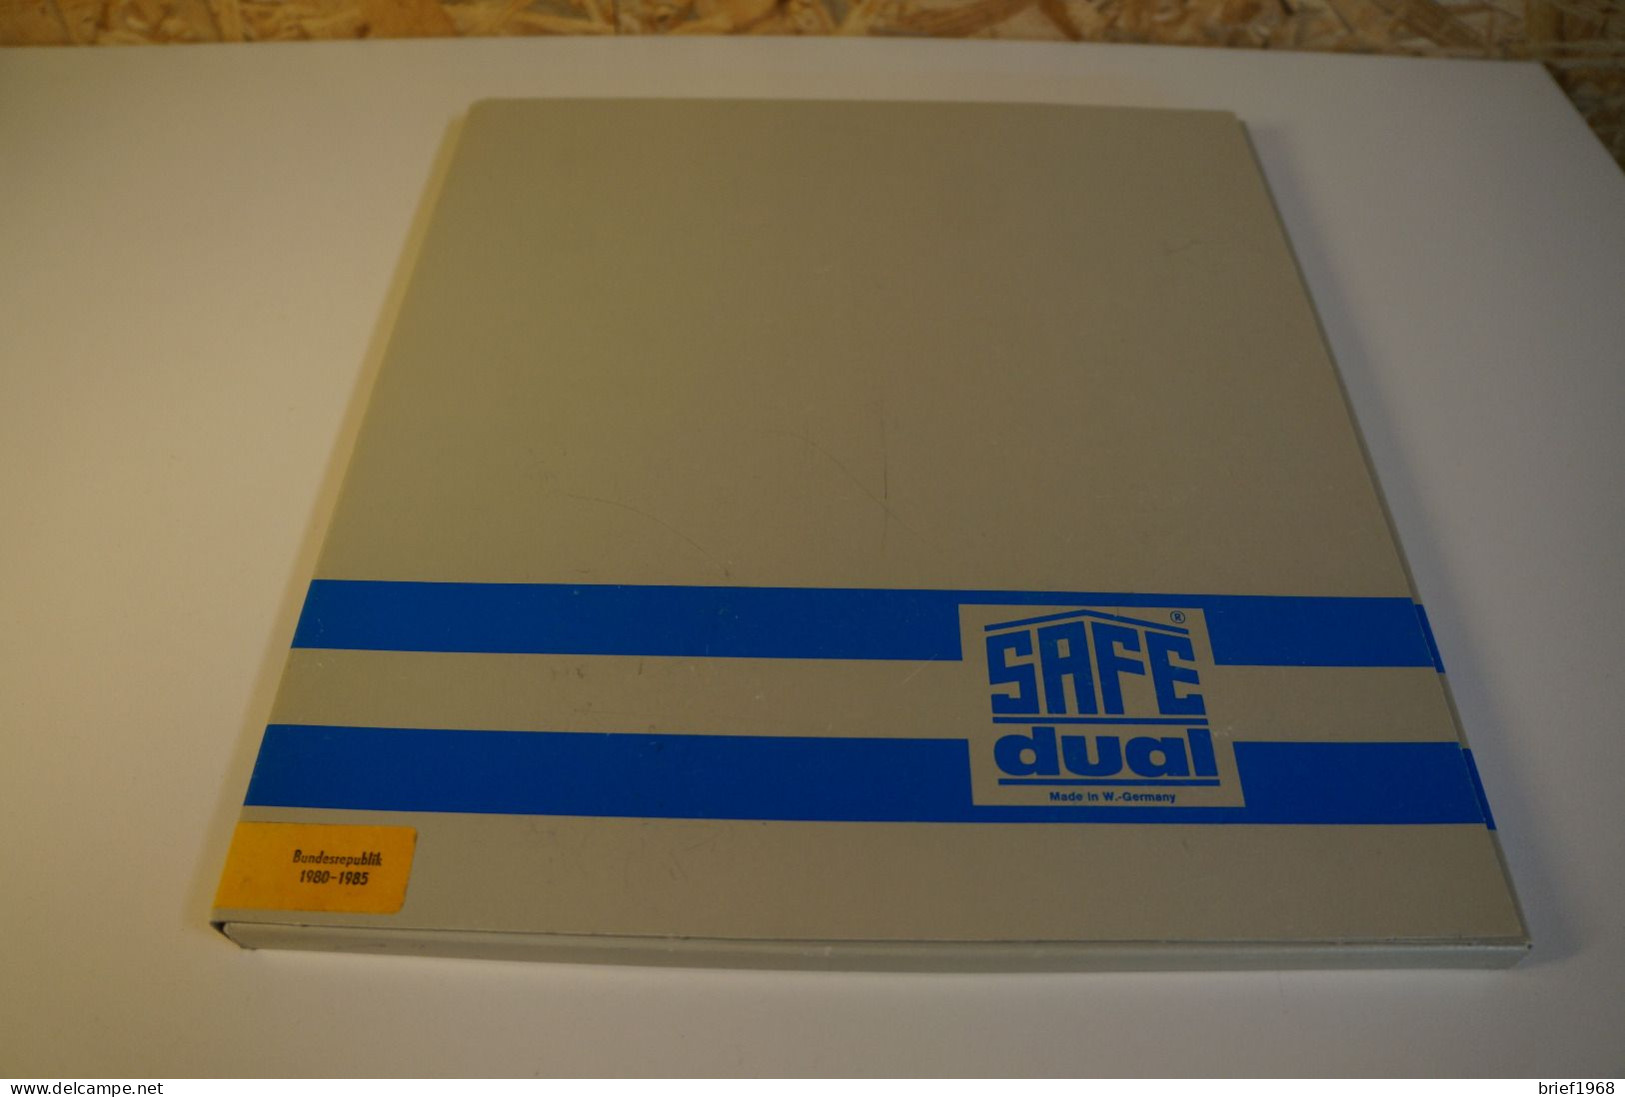 Bund Safe Dual 1980-1985 (27964) - Pre-Impresas